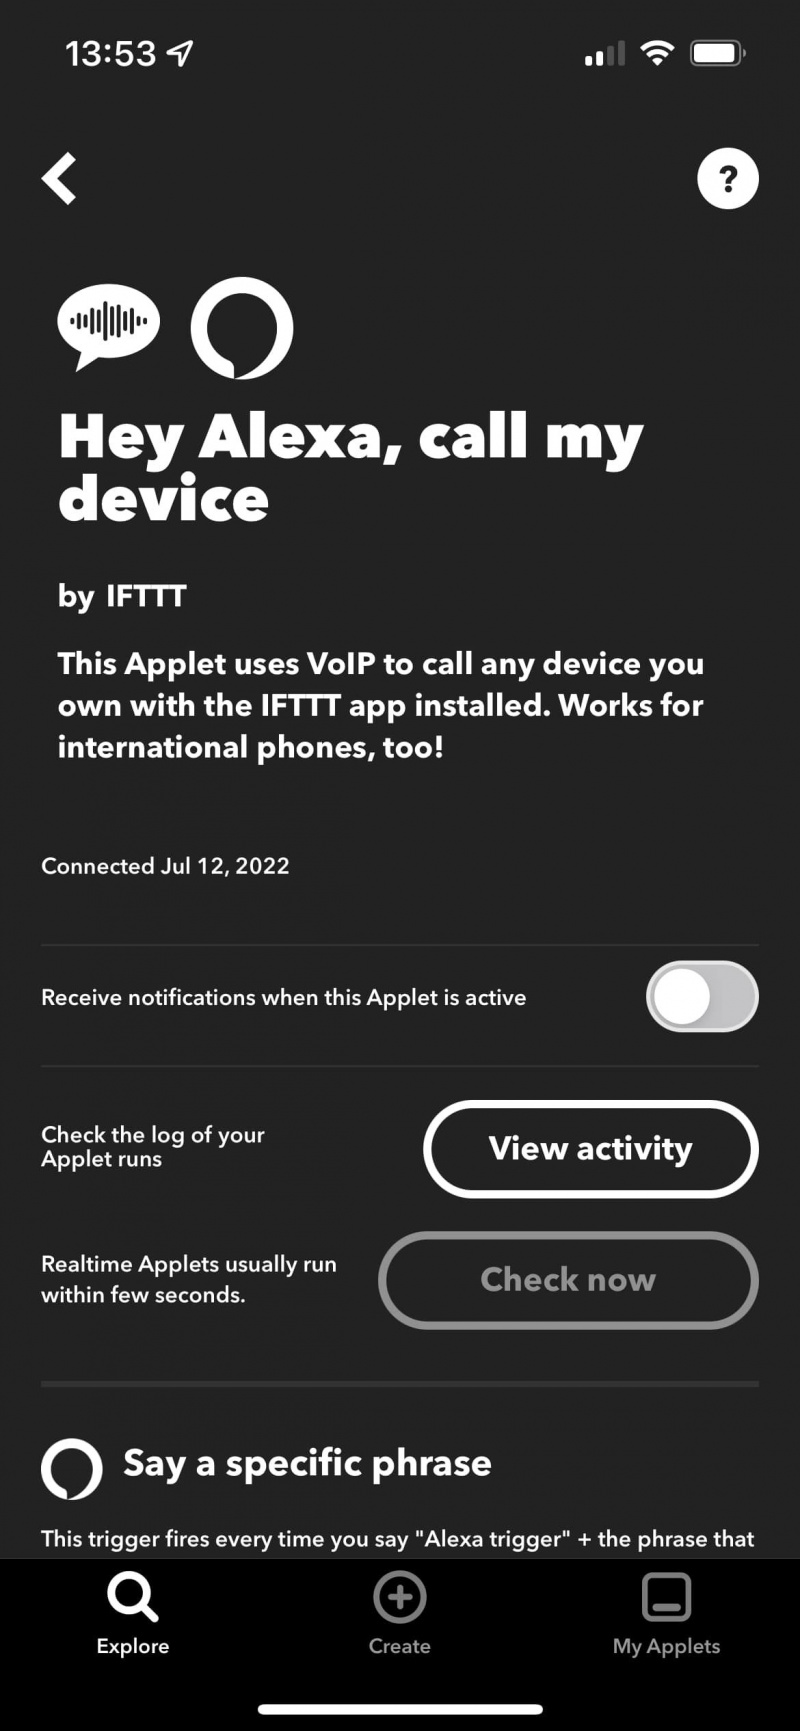   IFTTT 애플릿 설정 페이지의 상단 절반